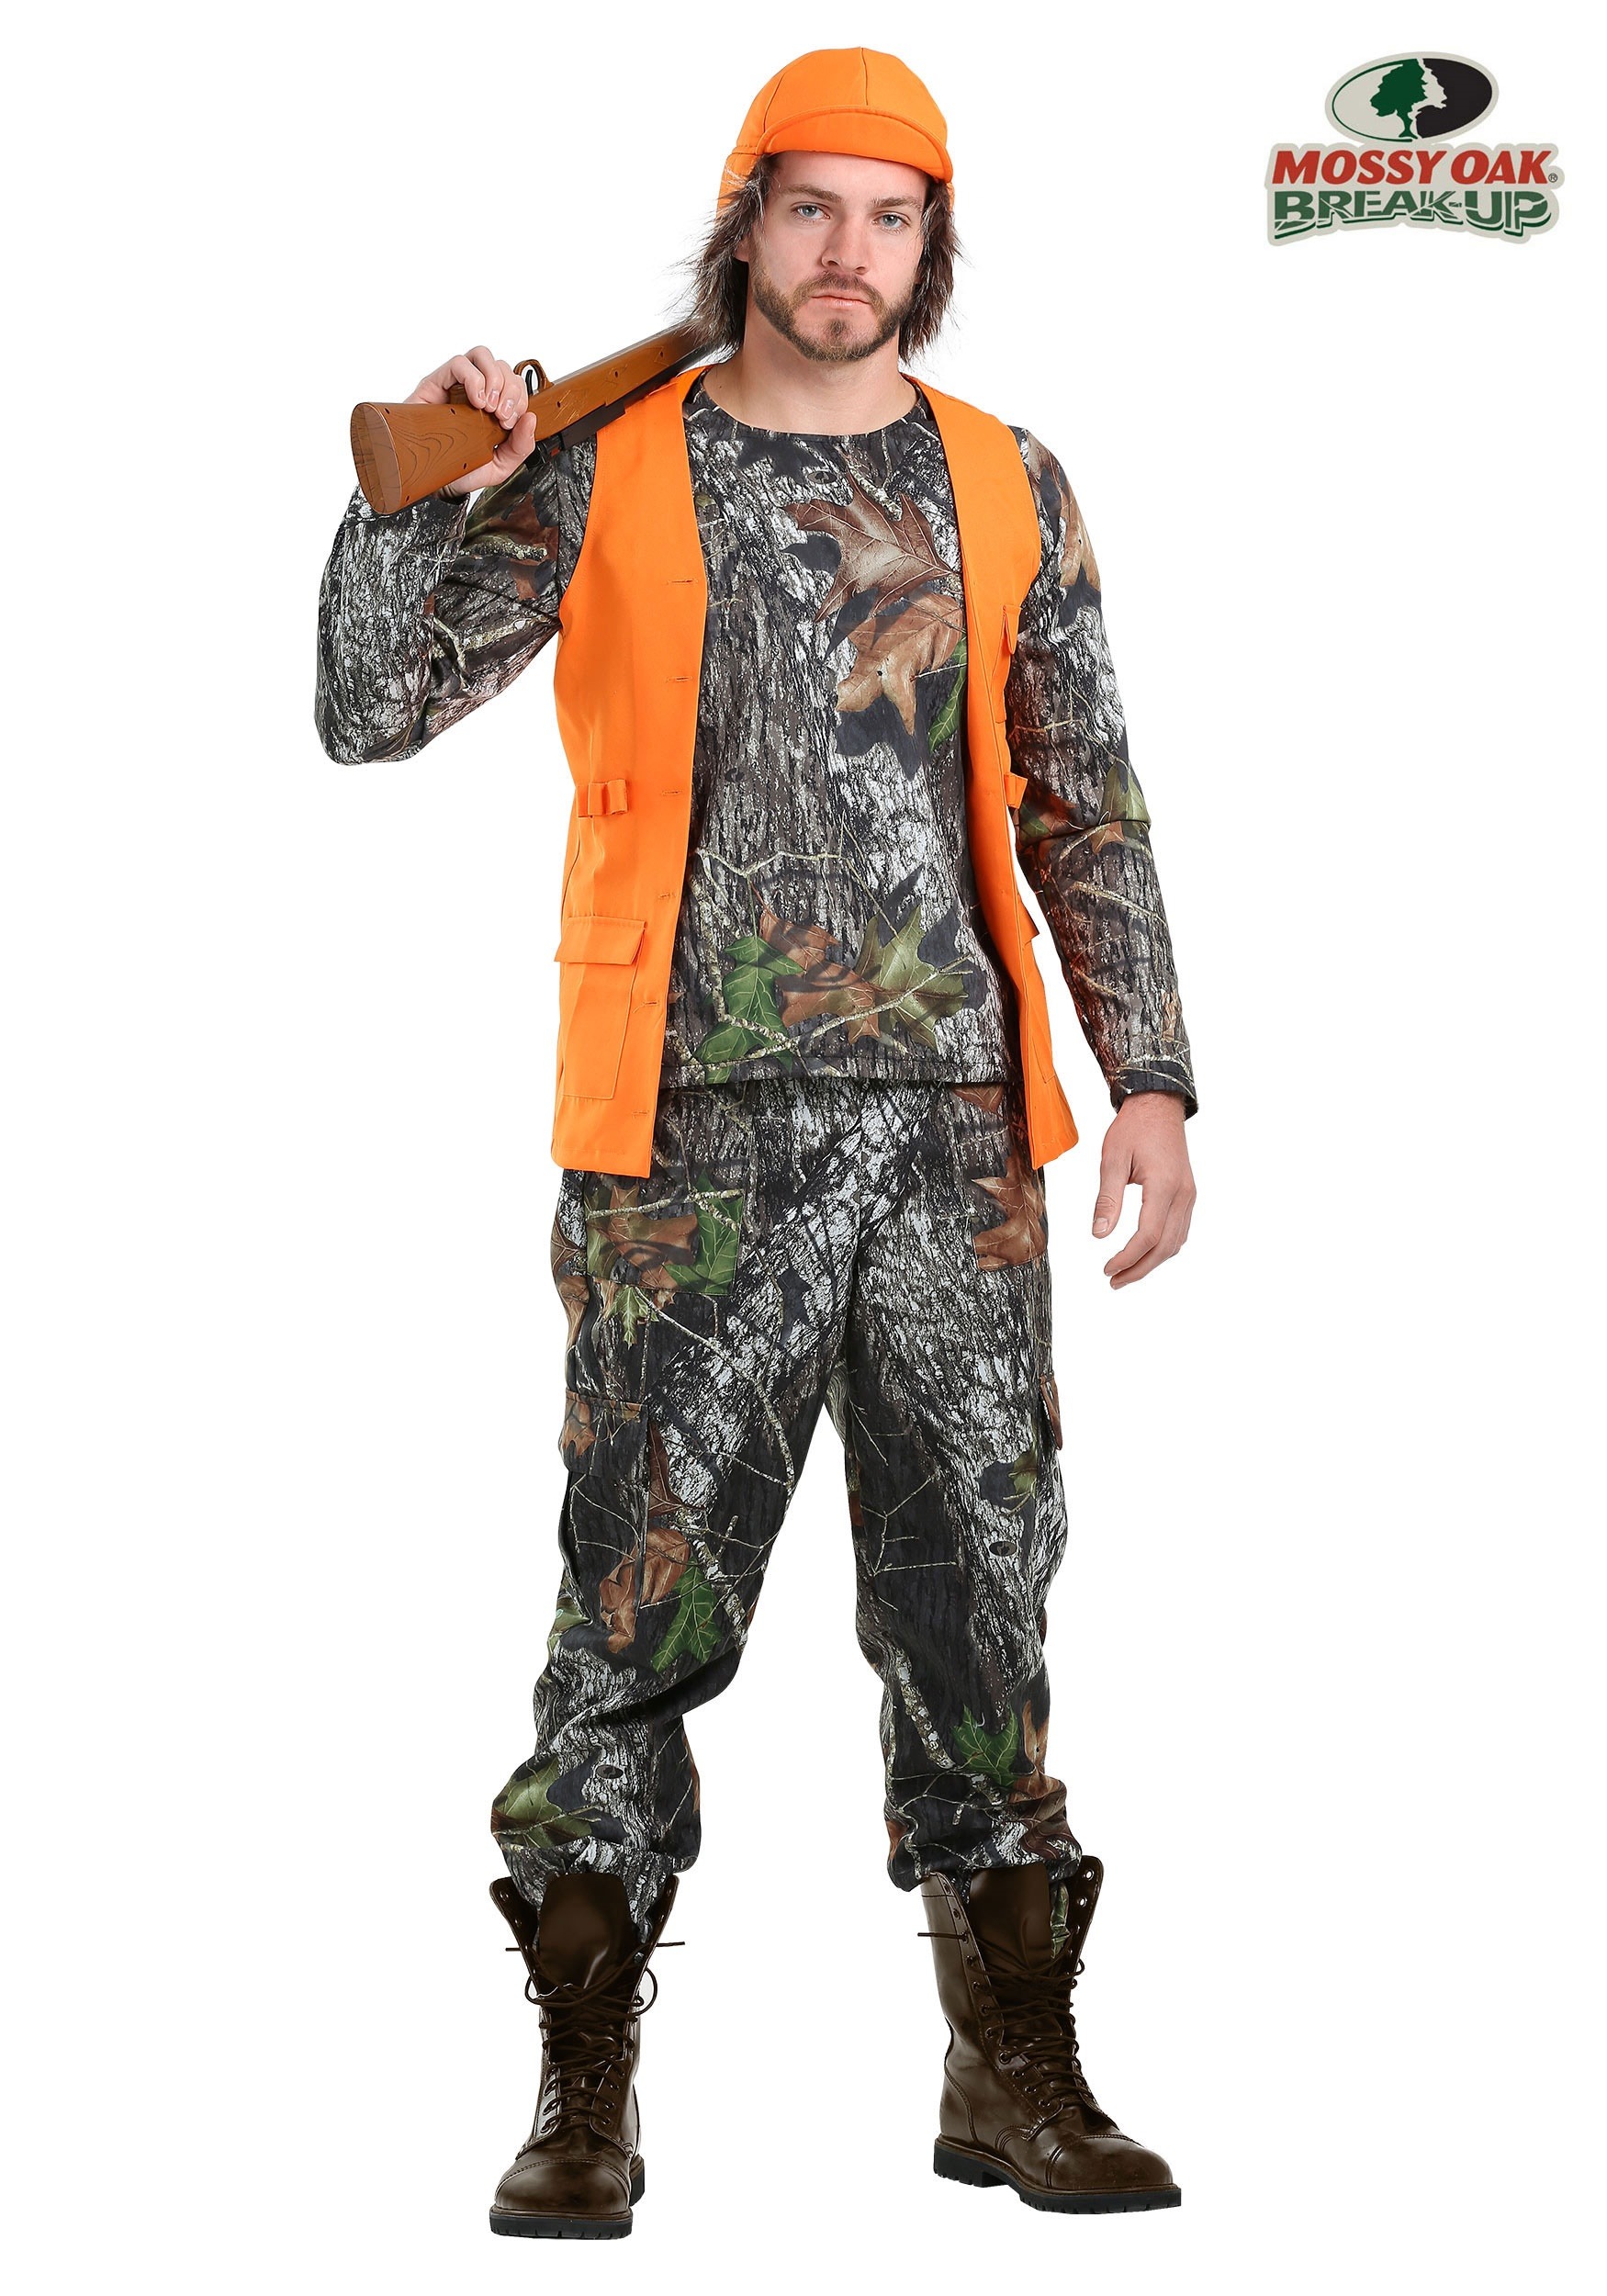 Mossy Oak Camo Hunter Costume for Plus Size Men 2X